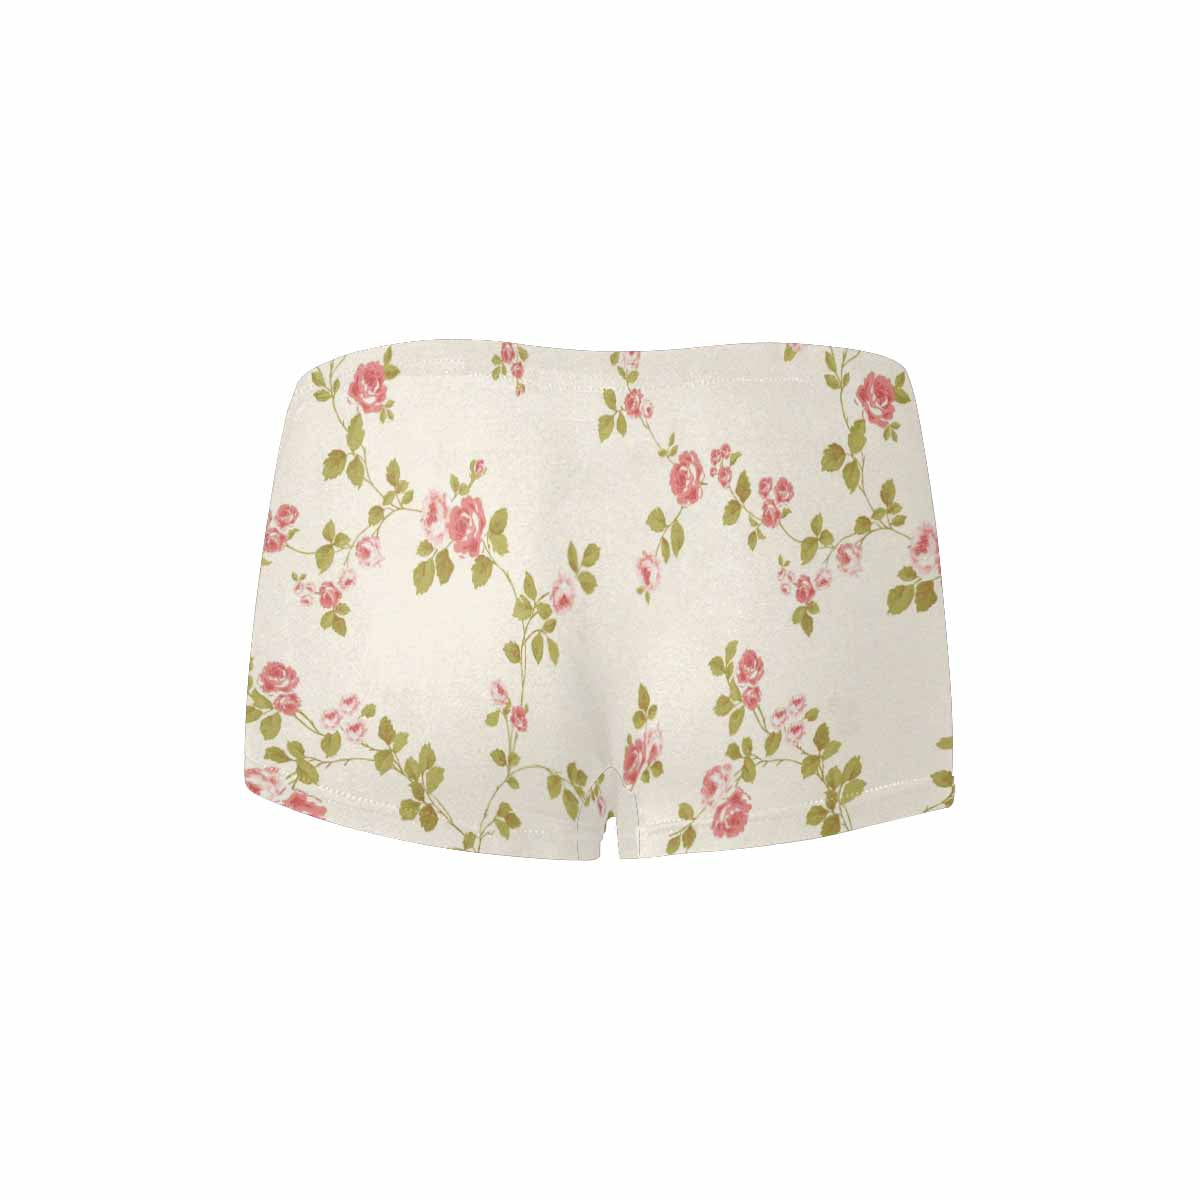 Floral 2, boyshorts, daisy dukes, pum pum shorts, panties, design 05